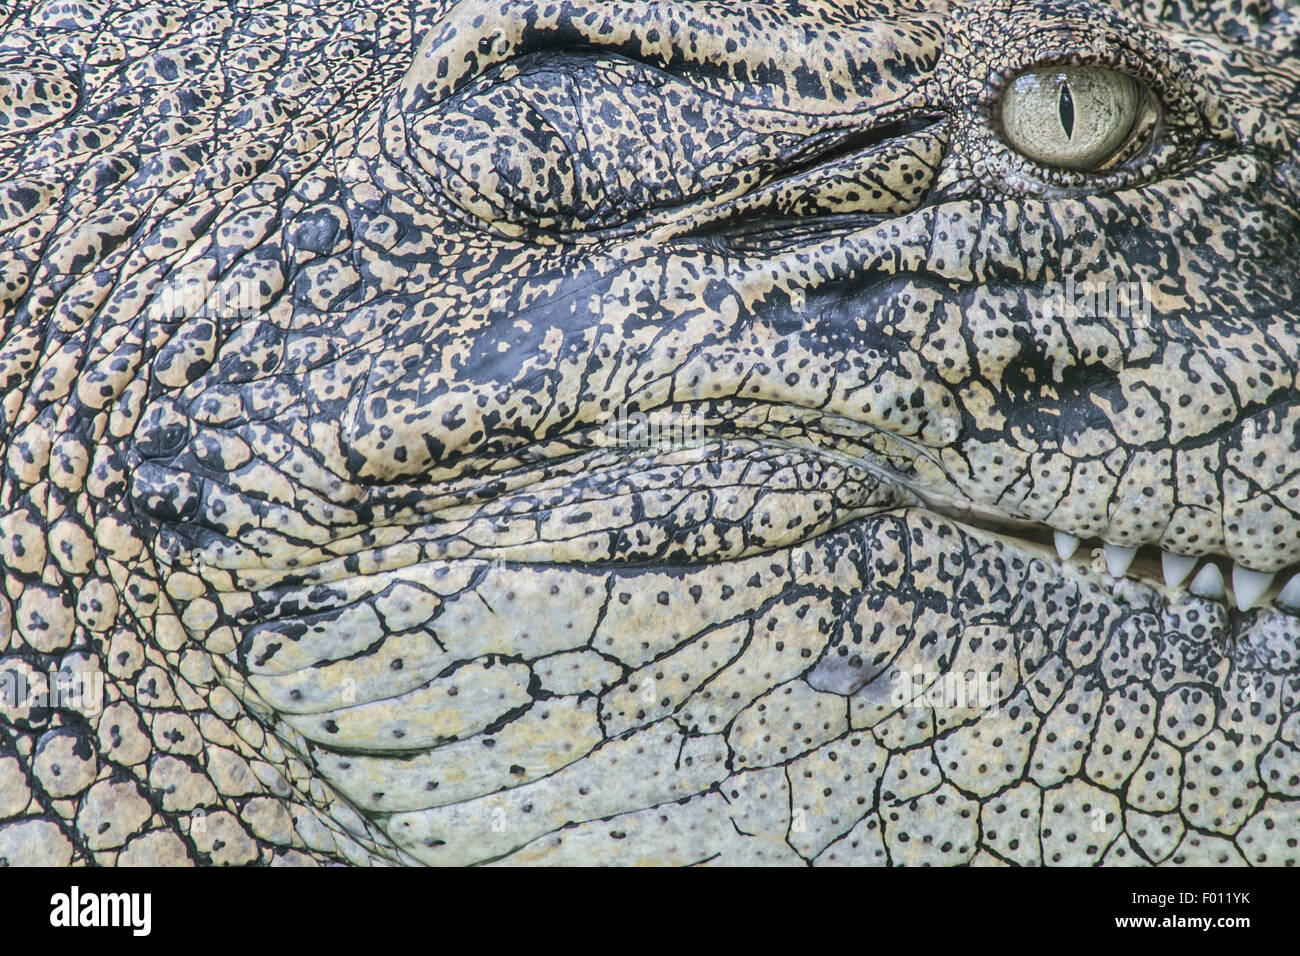 Close-up of saltwater crocodile head. Stock Photo